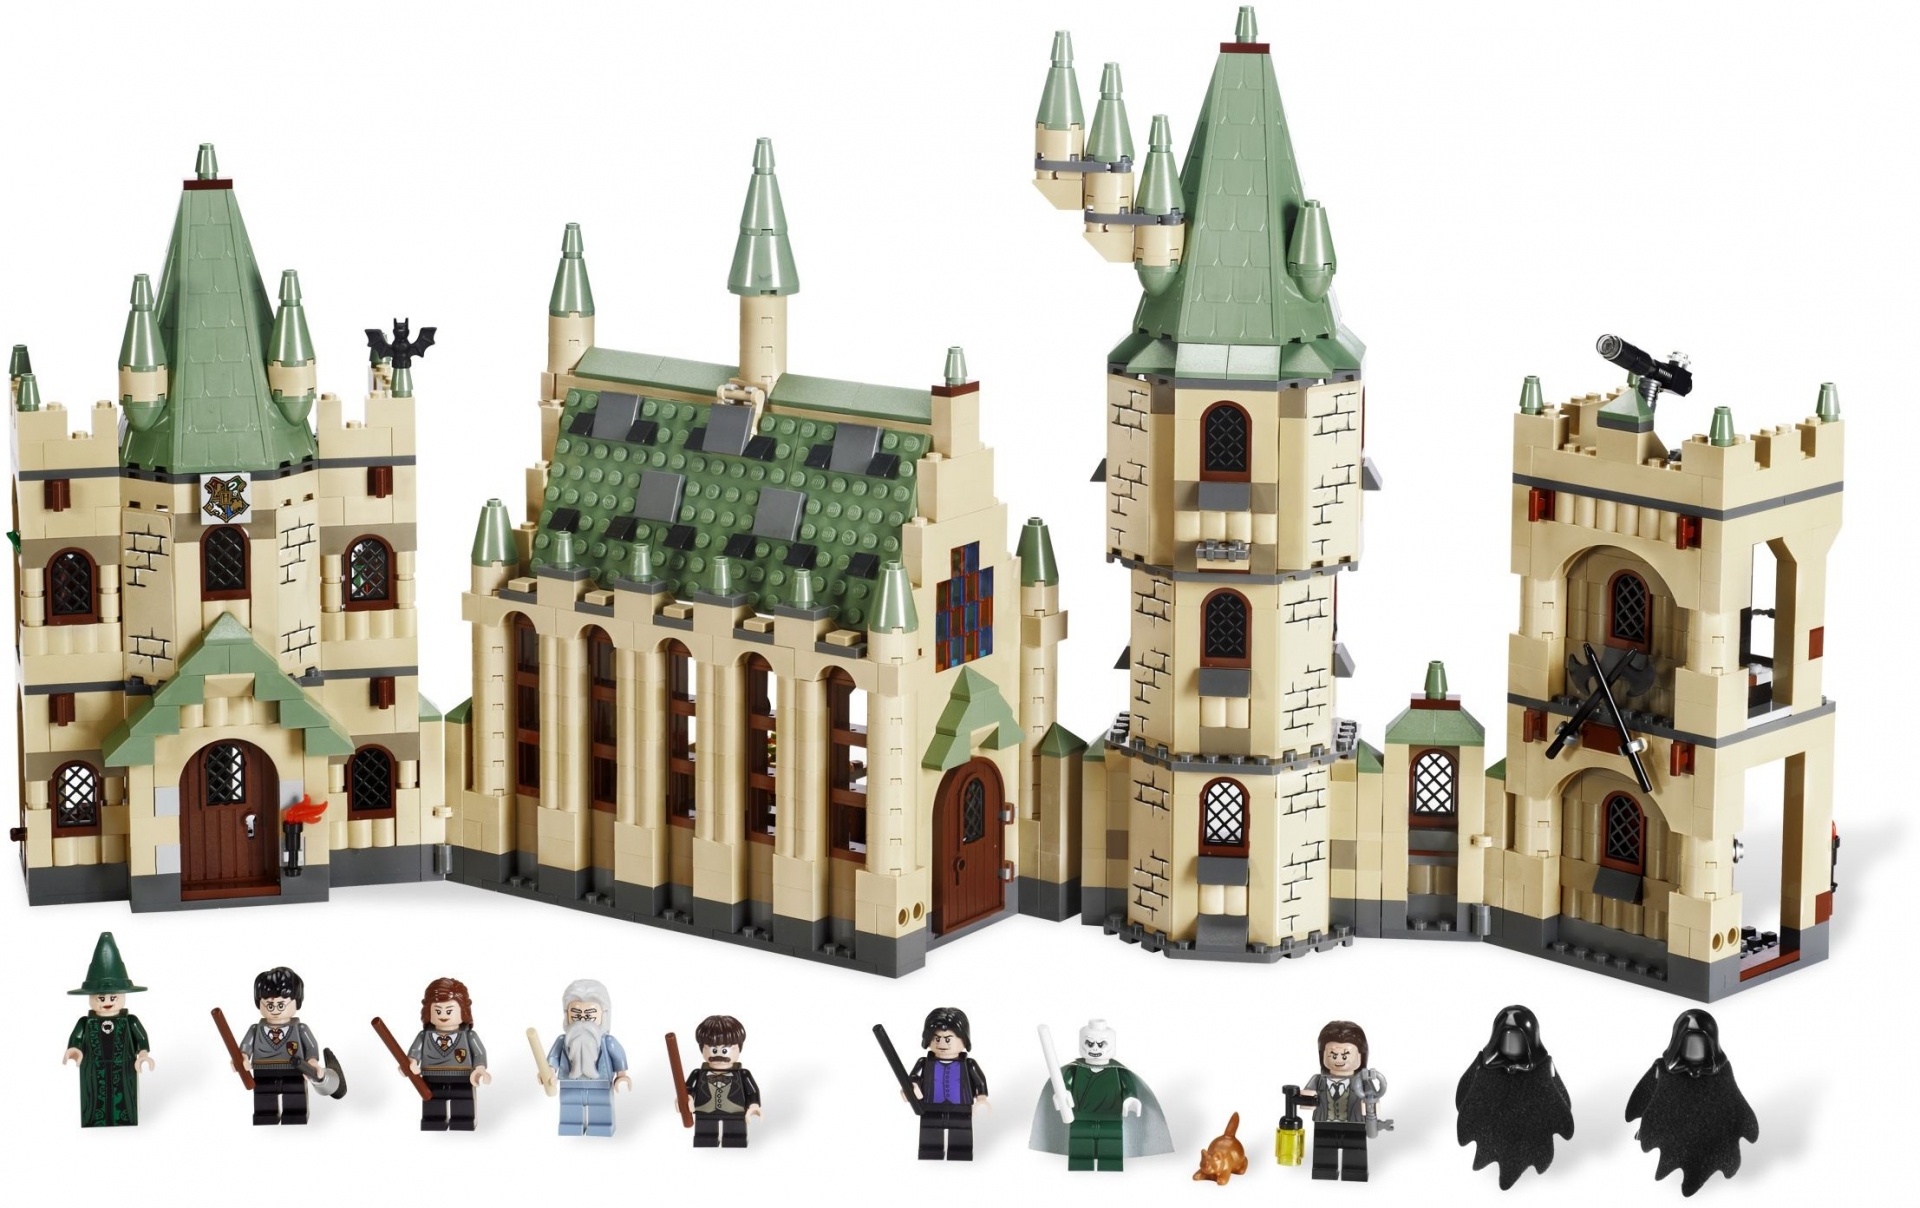 LEGO 4842 Hogwarts Castle Instructions, Harry Potter